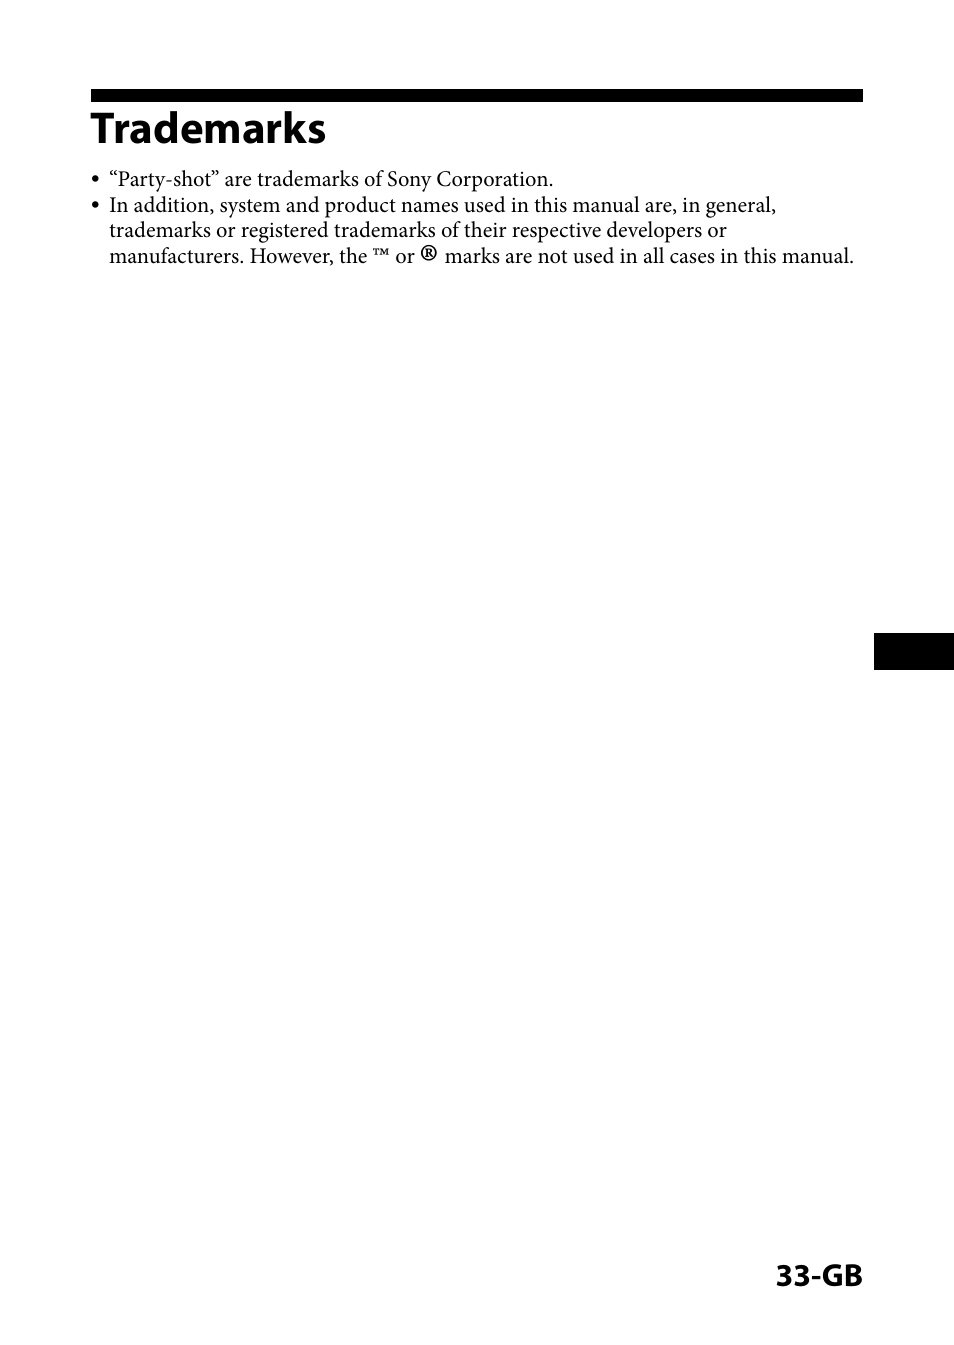 Trademarks | Sony IPT-DS1 Manuel d'utilisation | Page 69 / 131